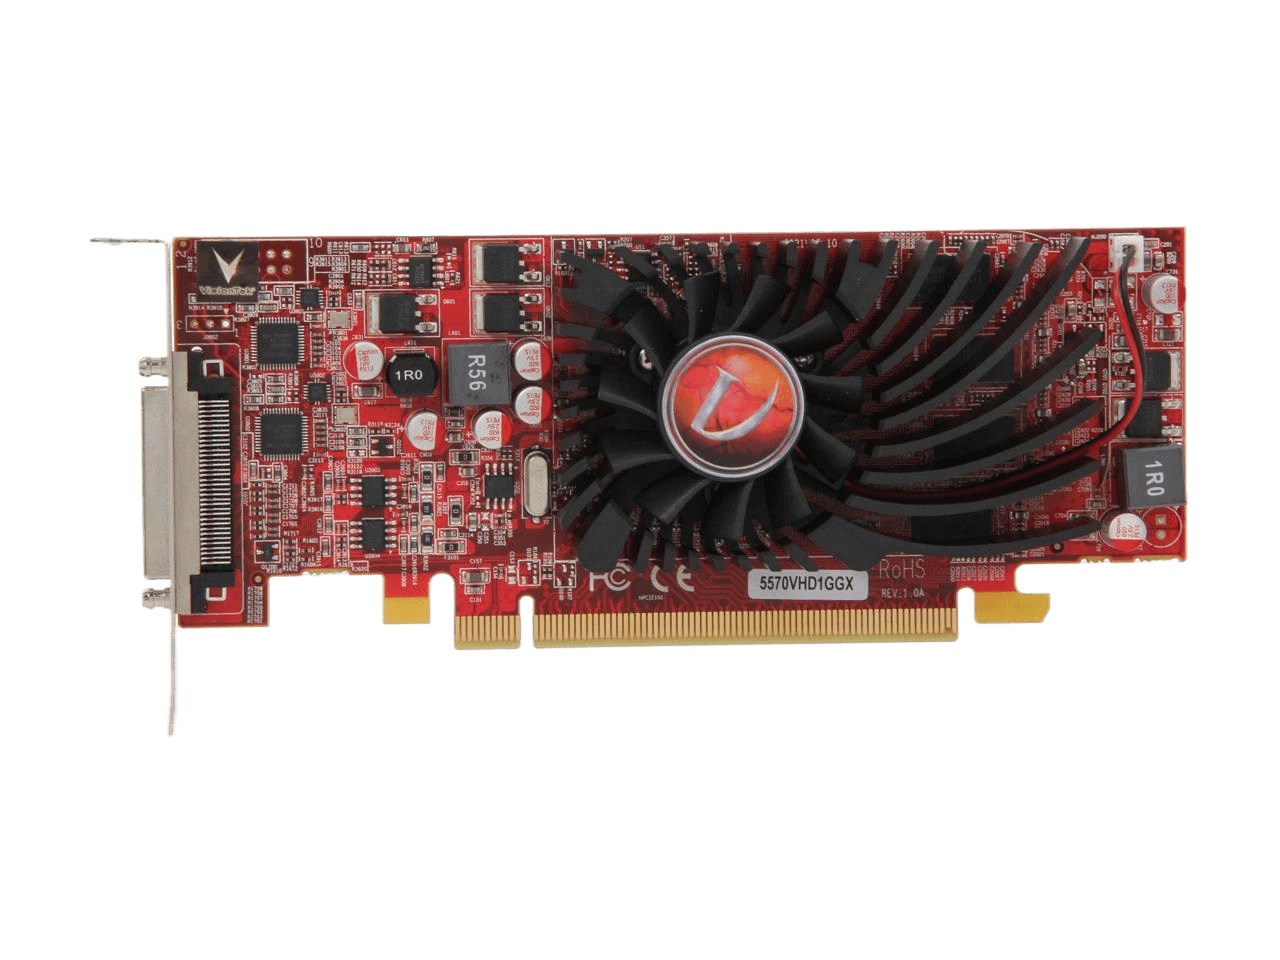 Visiontek AMD Radeon HD 5570 SFF 1GB 900345 DDR3 4M VHDCI DVI (4 x DVI-D) Video Graphics Card